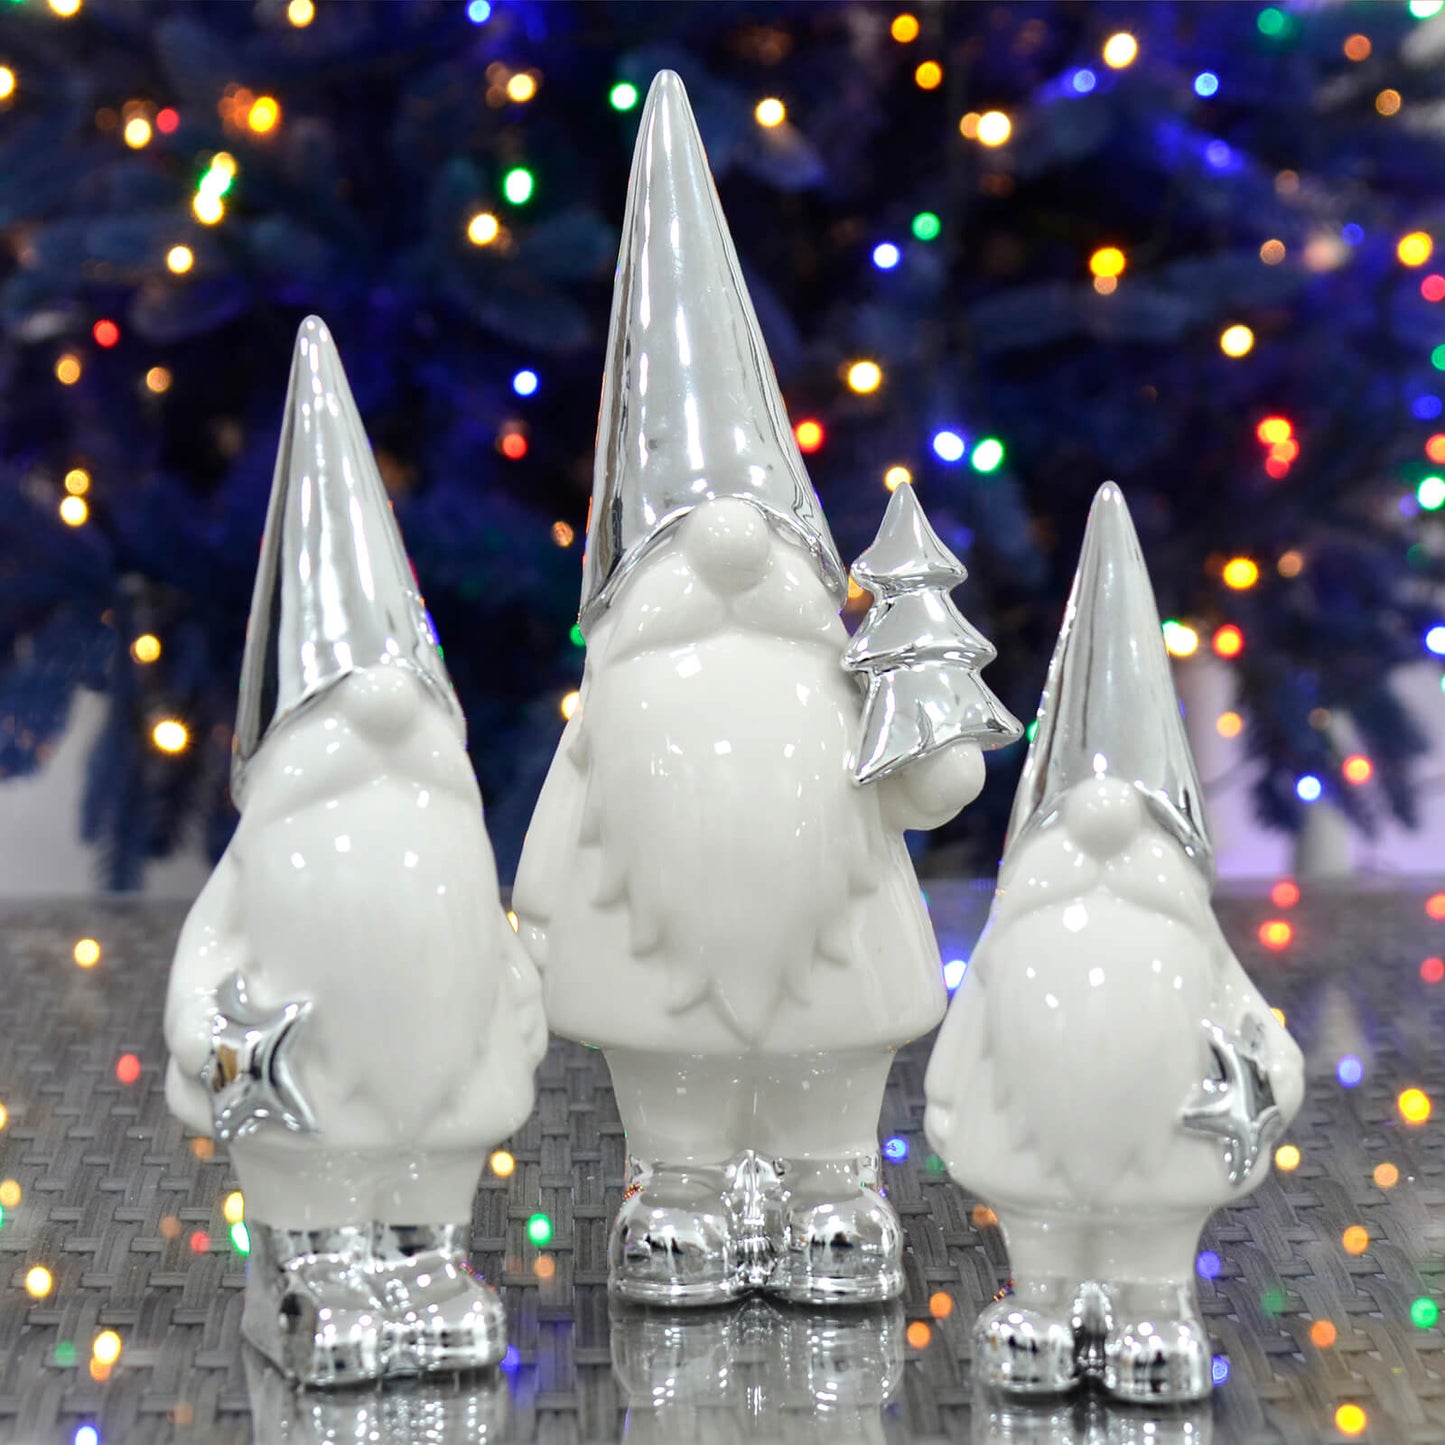 Mr Crimbo Set of 3 Santa Ornaments Ceramic Decorations 24cm - MrCrimbo.co.uk -XS7197 - -ceramic gonk